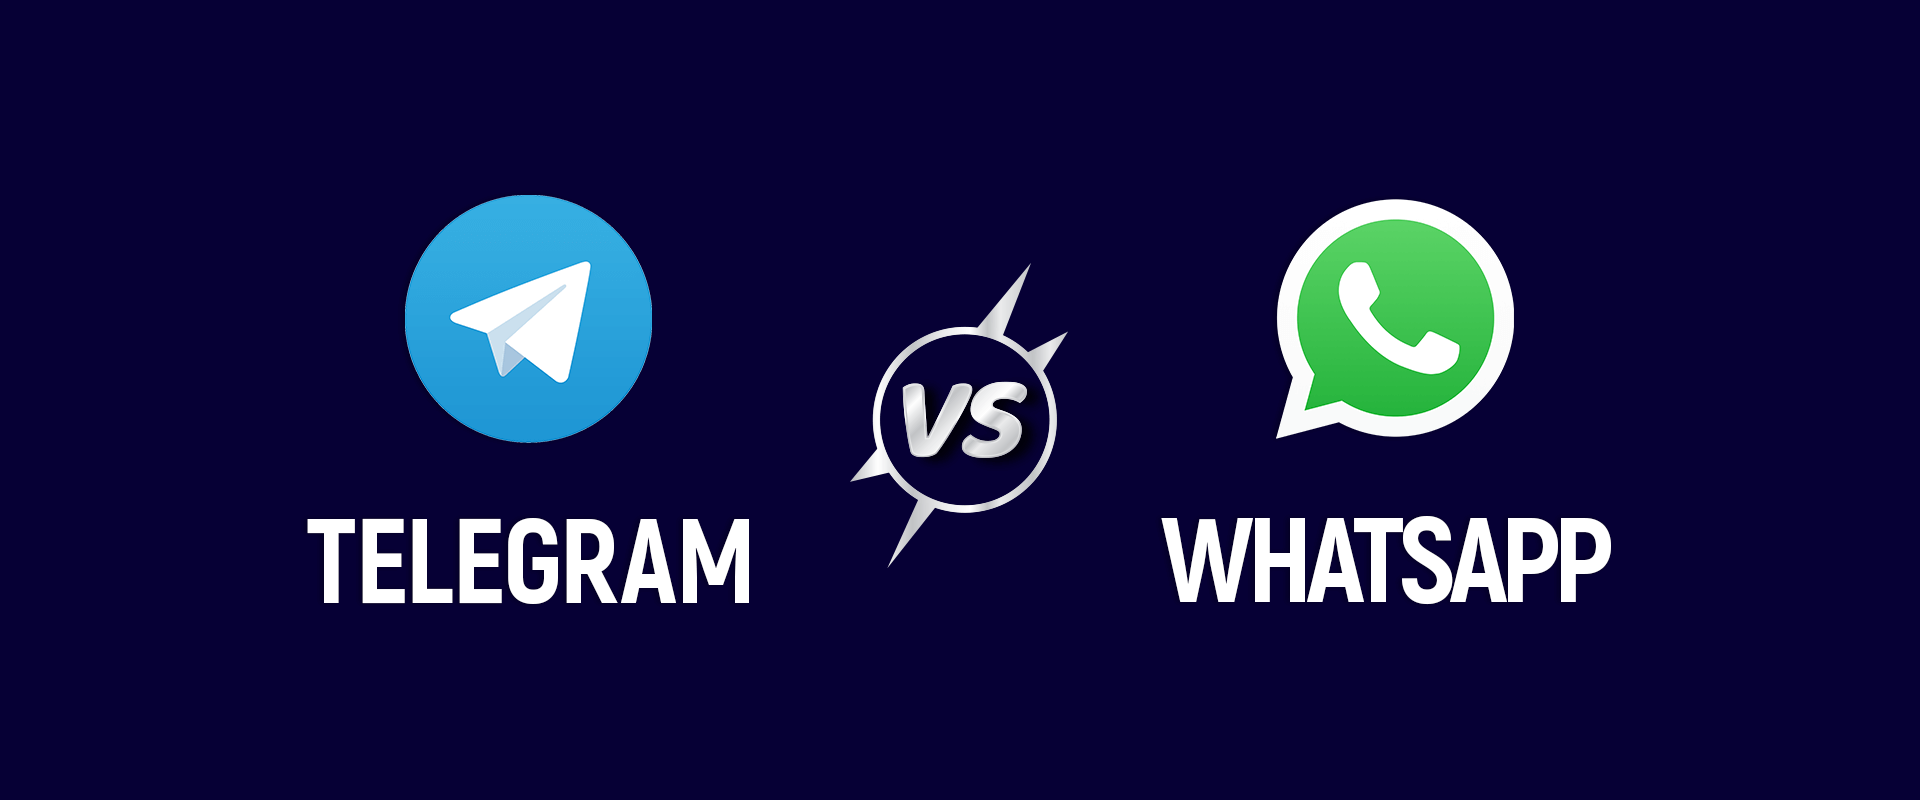 Telegram vs WhatsApp 1